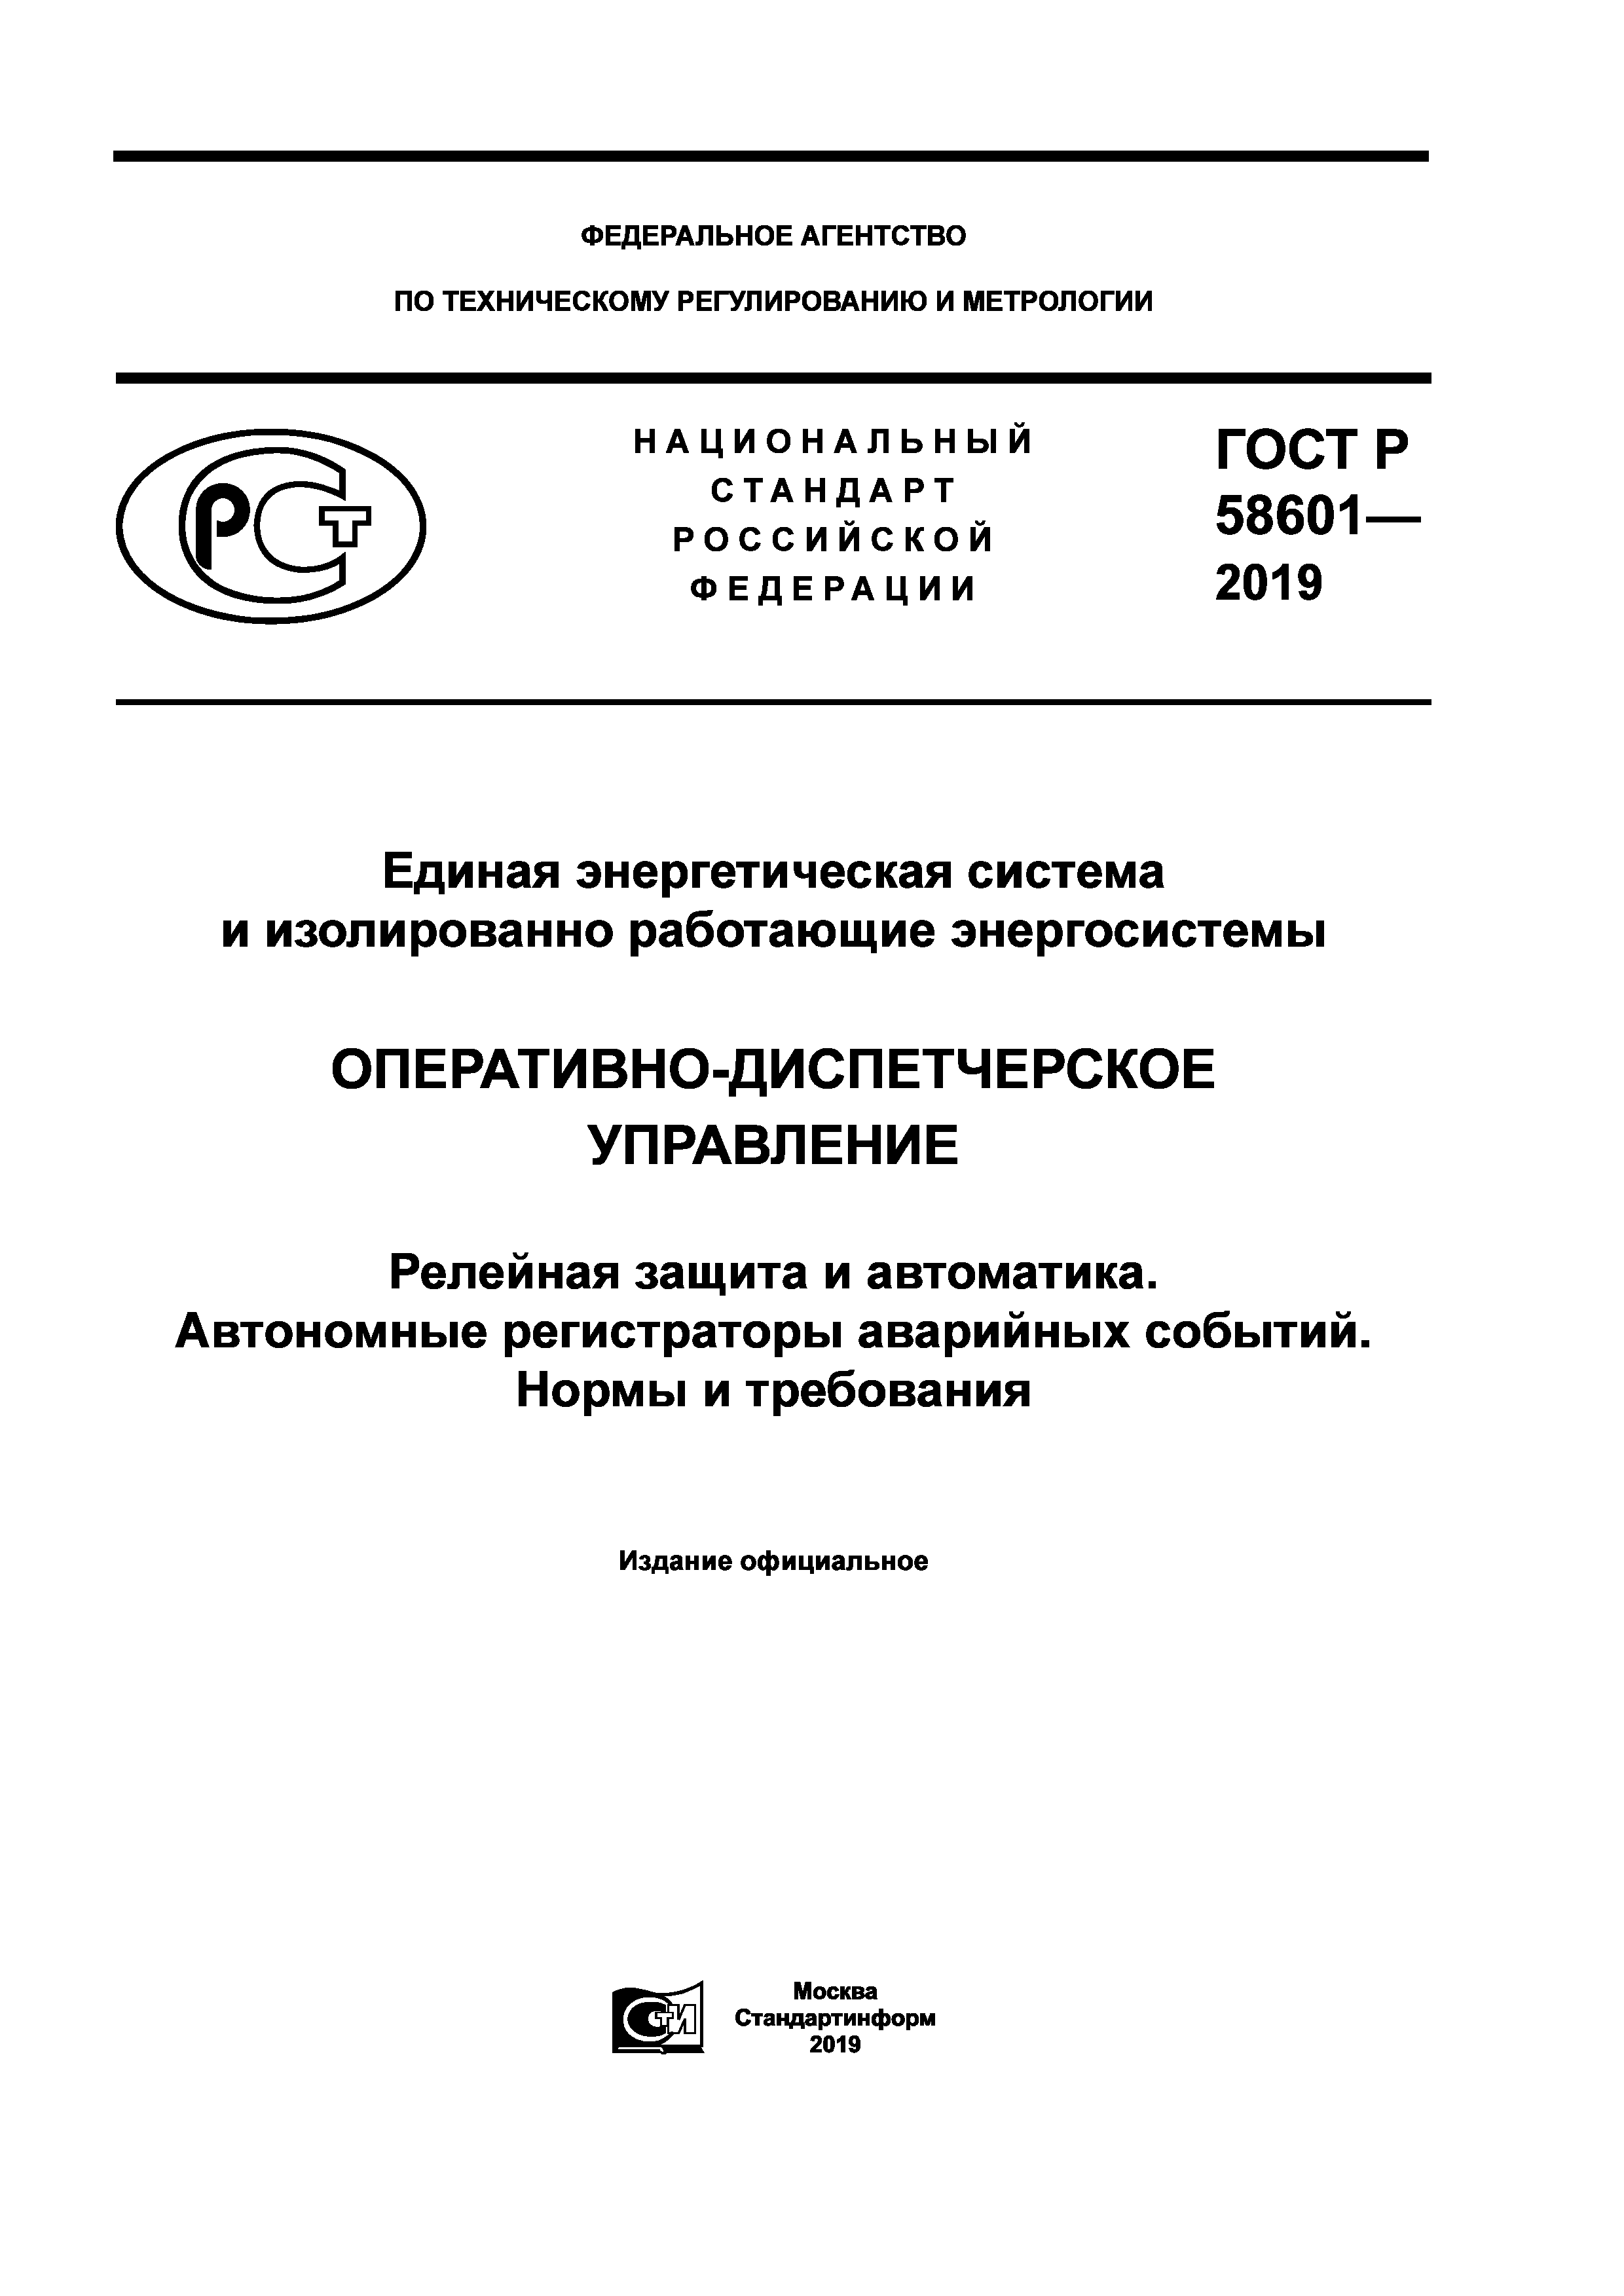 ГОСТ Р 58601-2019